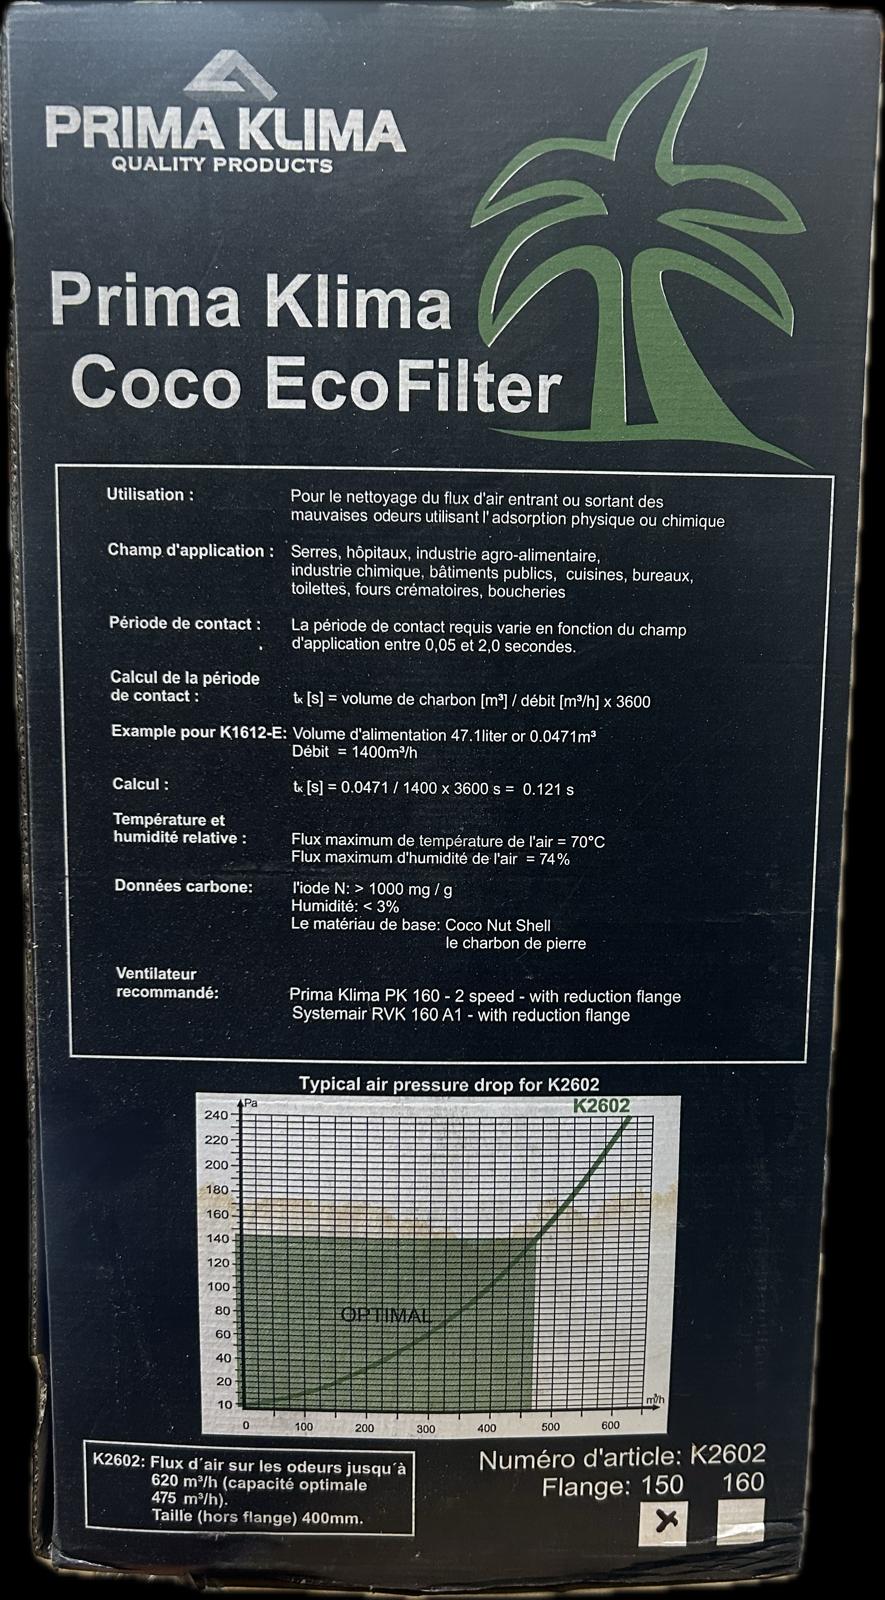 Prima Klima 6" Coco Eco Filter